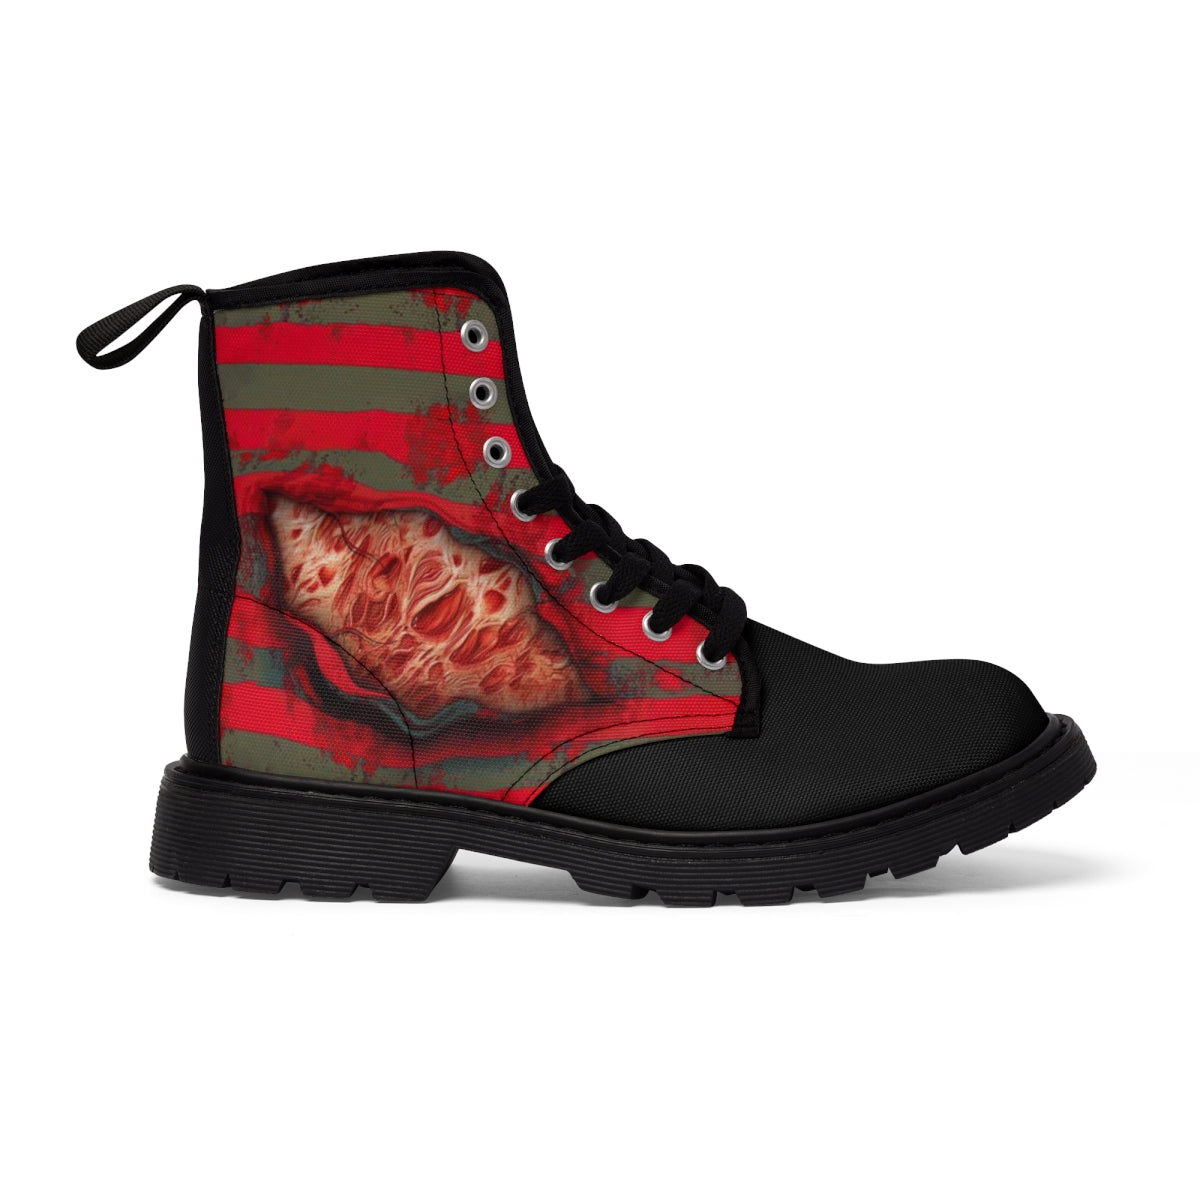 Freddy's burns - Krueger boots | Halloween Freak Canvas Boots (Women's sizes)